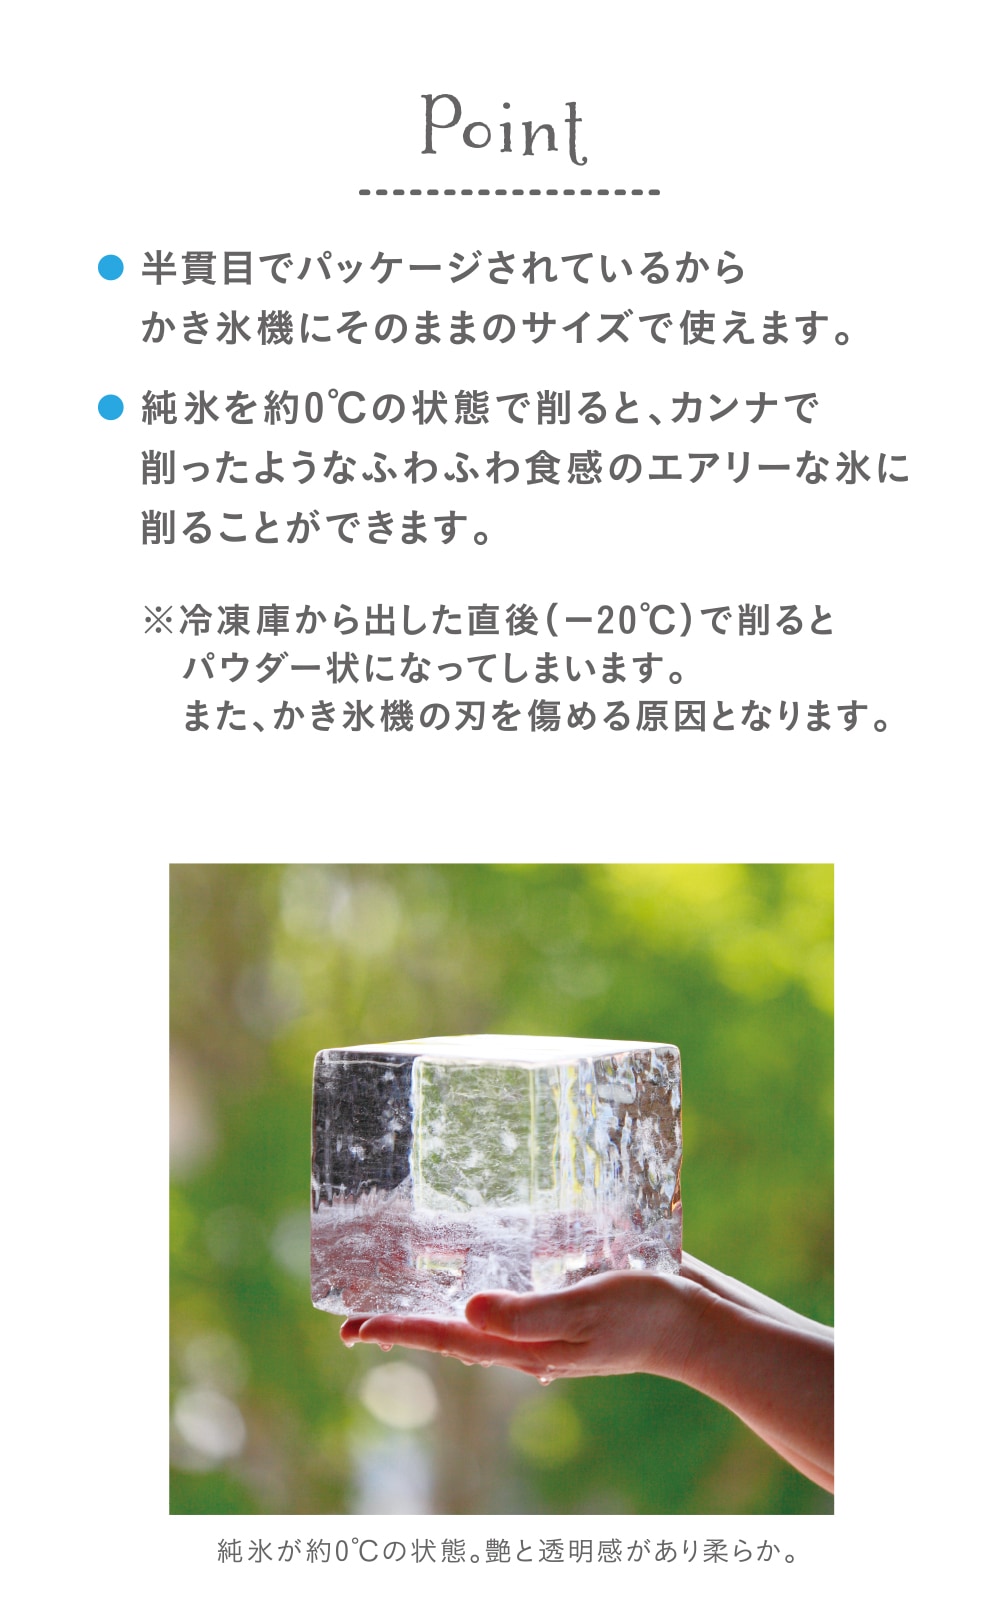 TY京都宇治抹茶ミックス 2kgの販売ページ タカナシミルク WEB SHOP